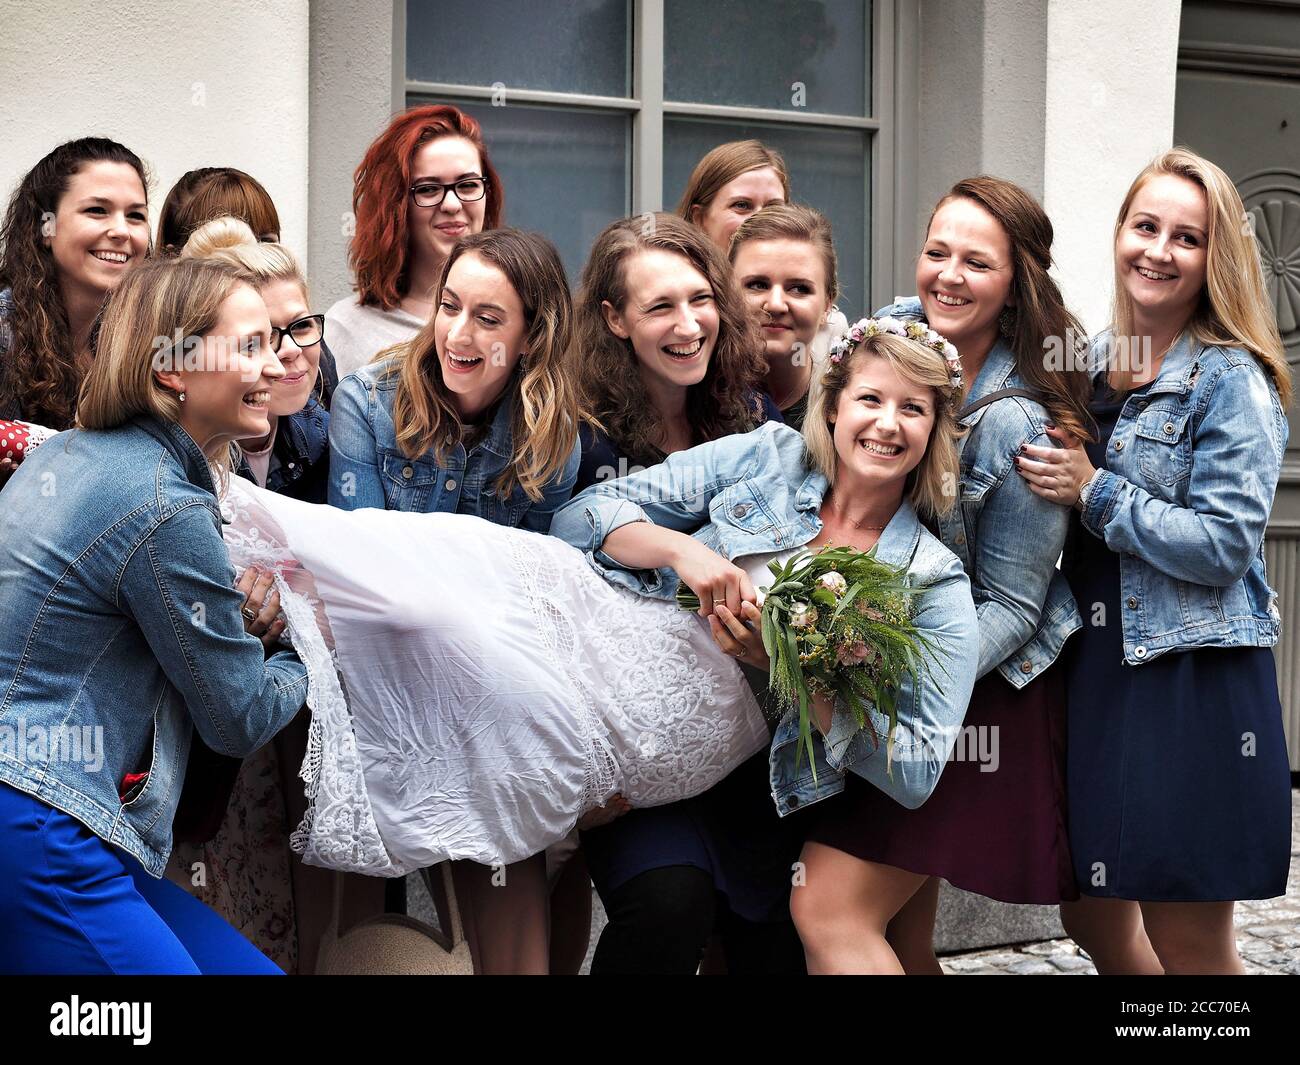 GUMPOLDSKIRCHEN, AUSTRIA - 09/01/2018. Happy caucasian bride among laughing bridesmaids. Stock Photo